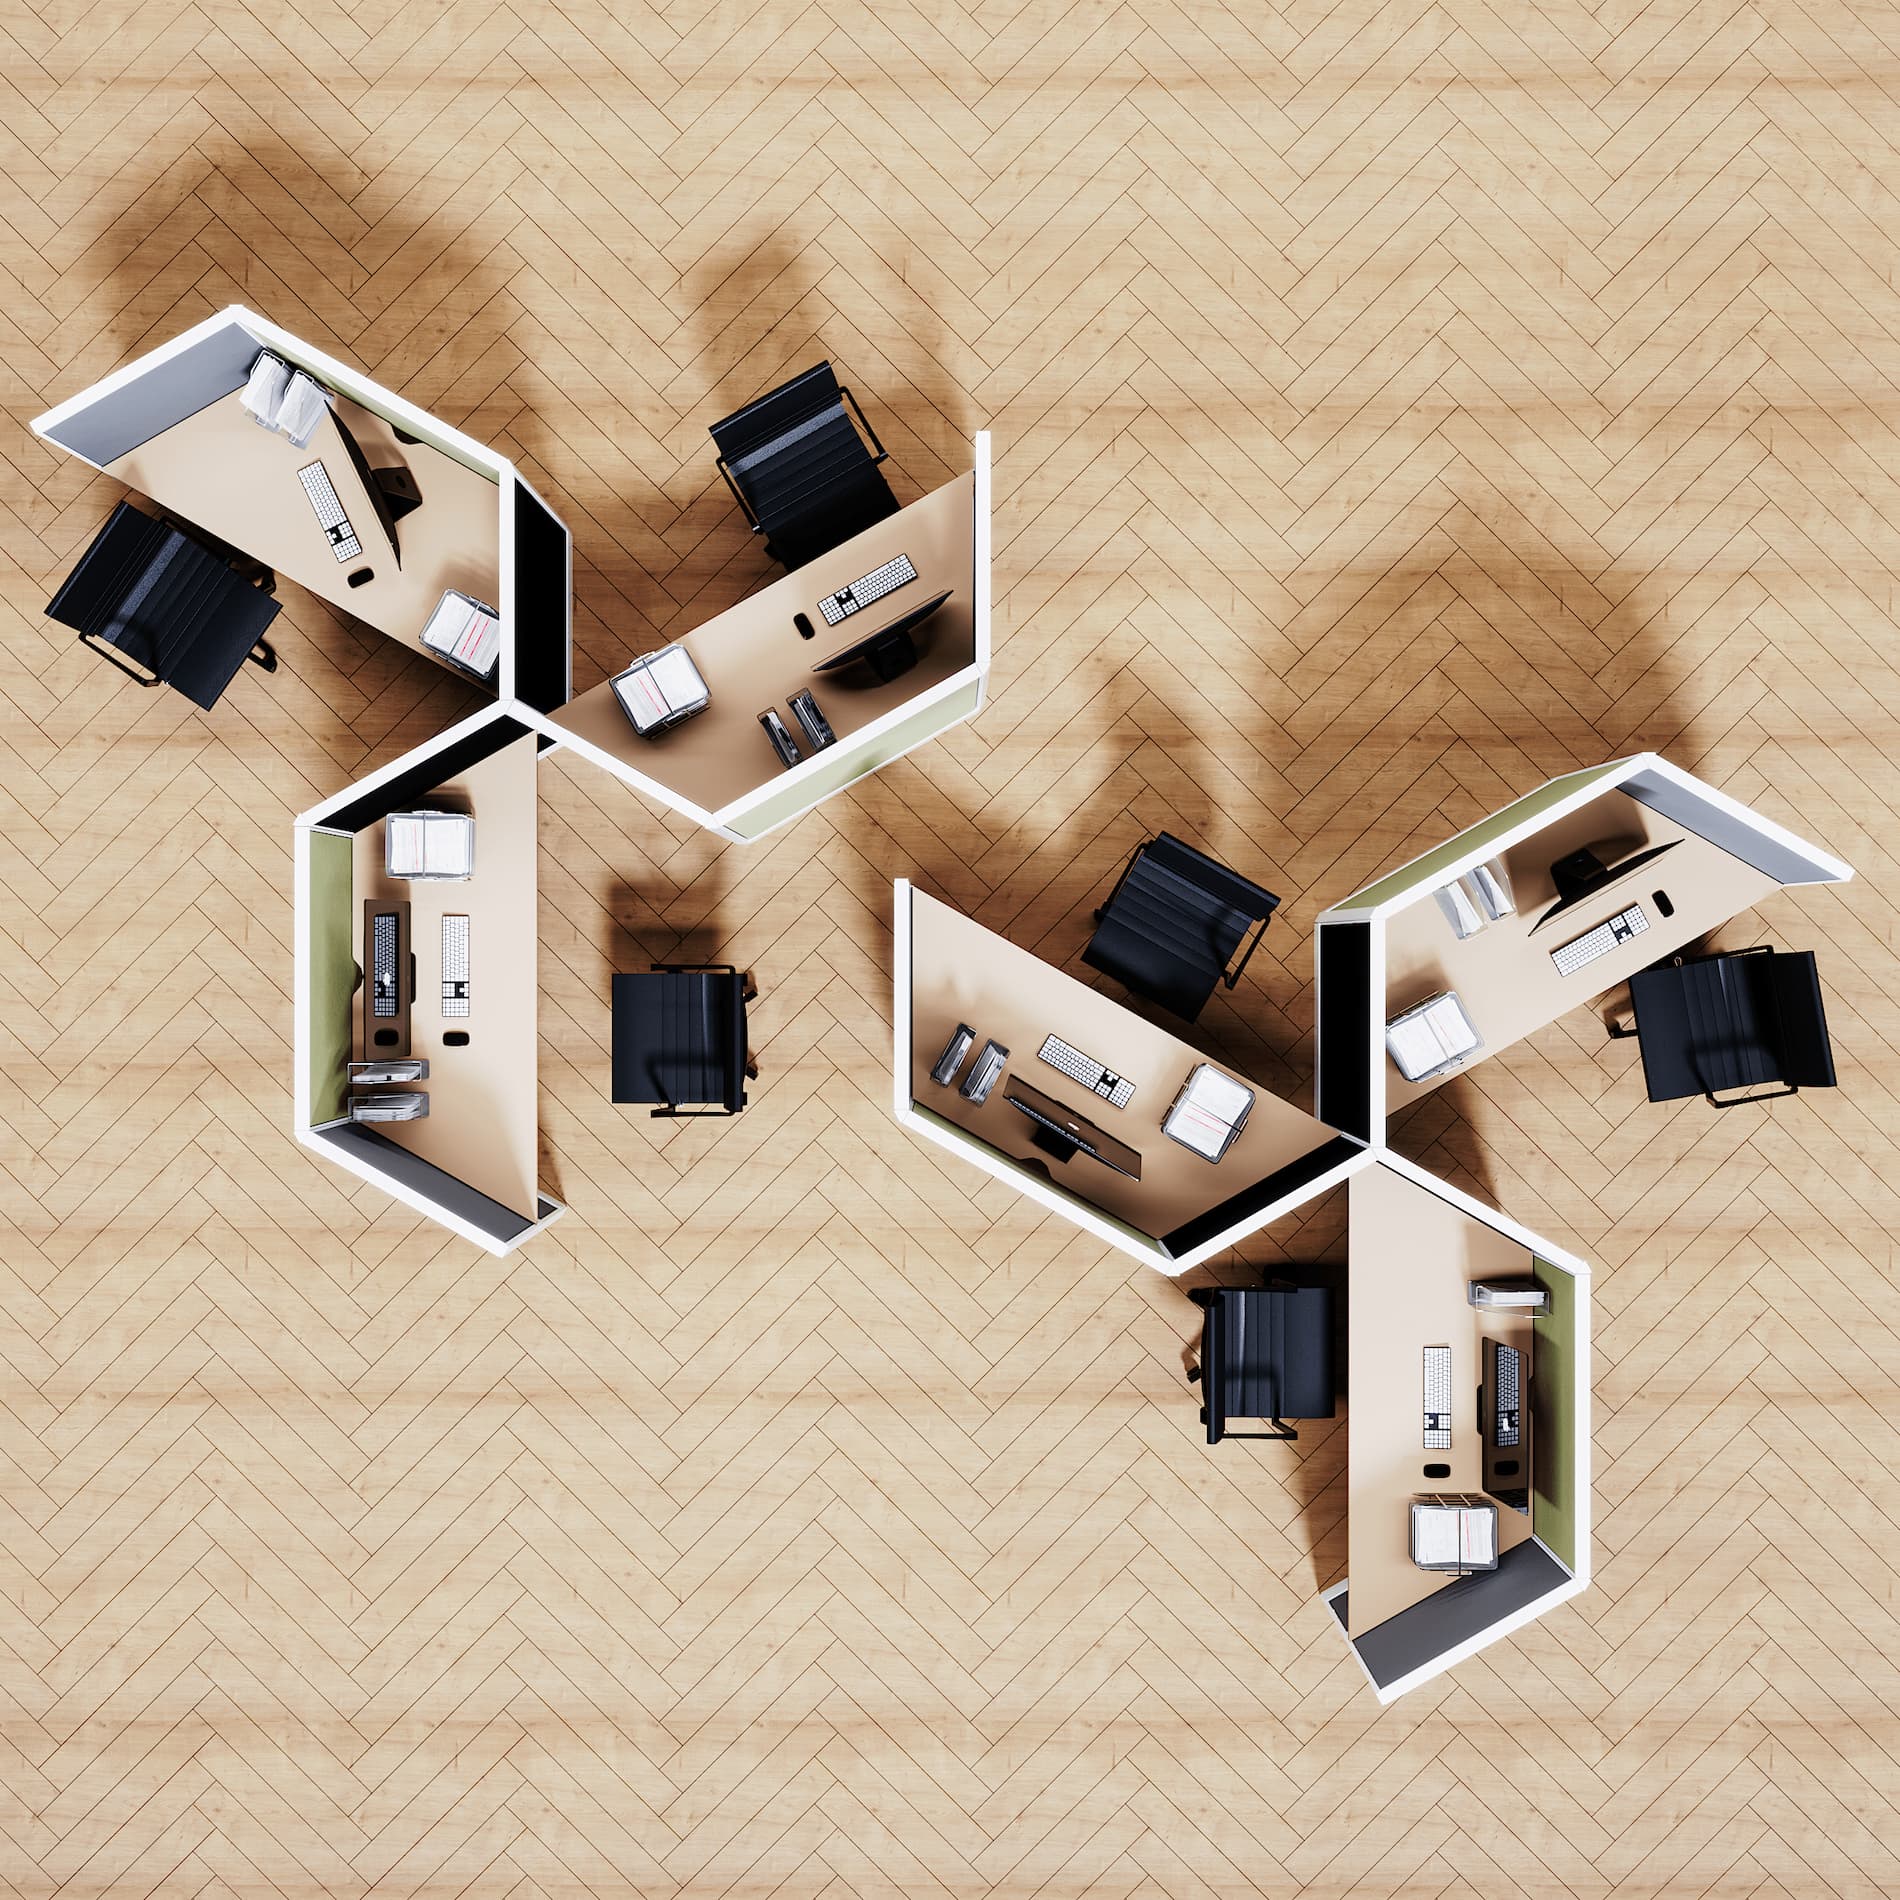 sitting-arrangement-office-design-layout